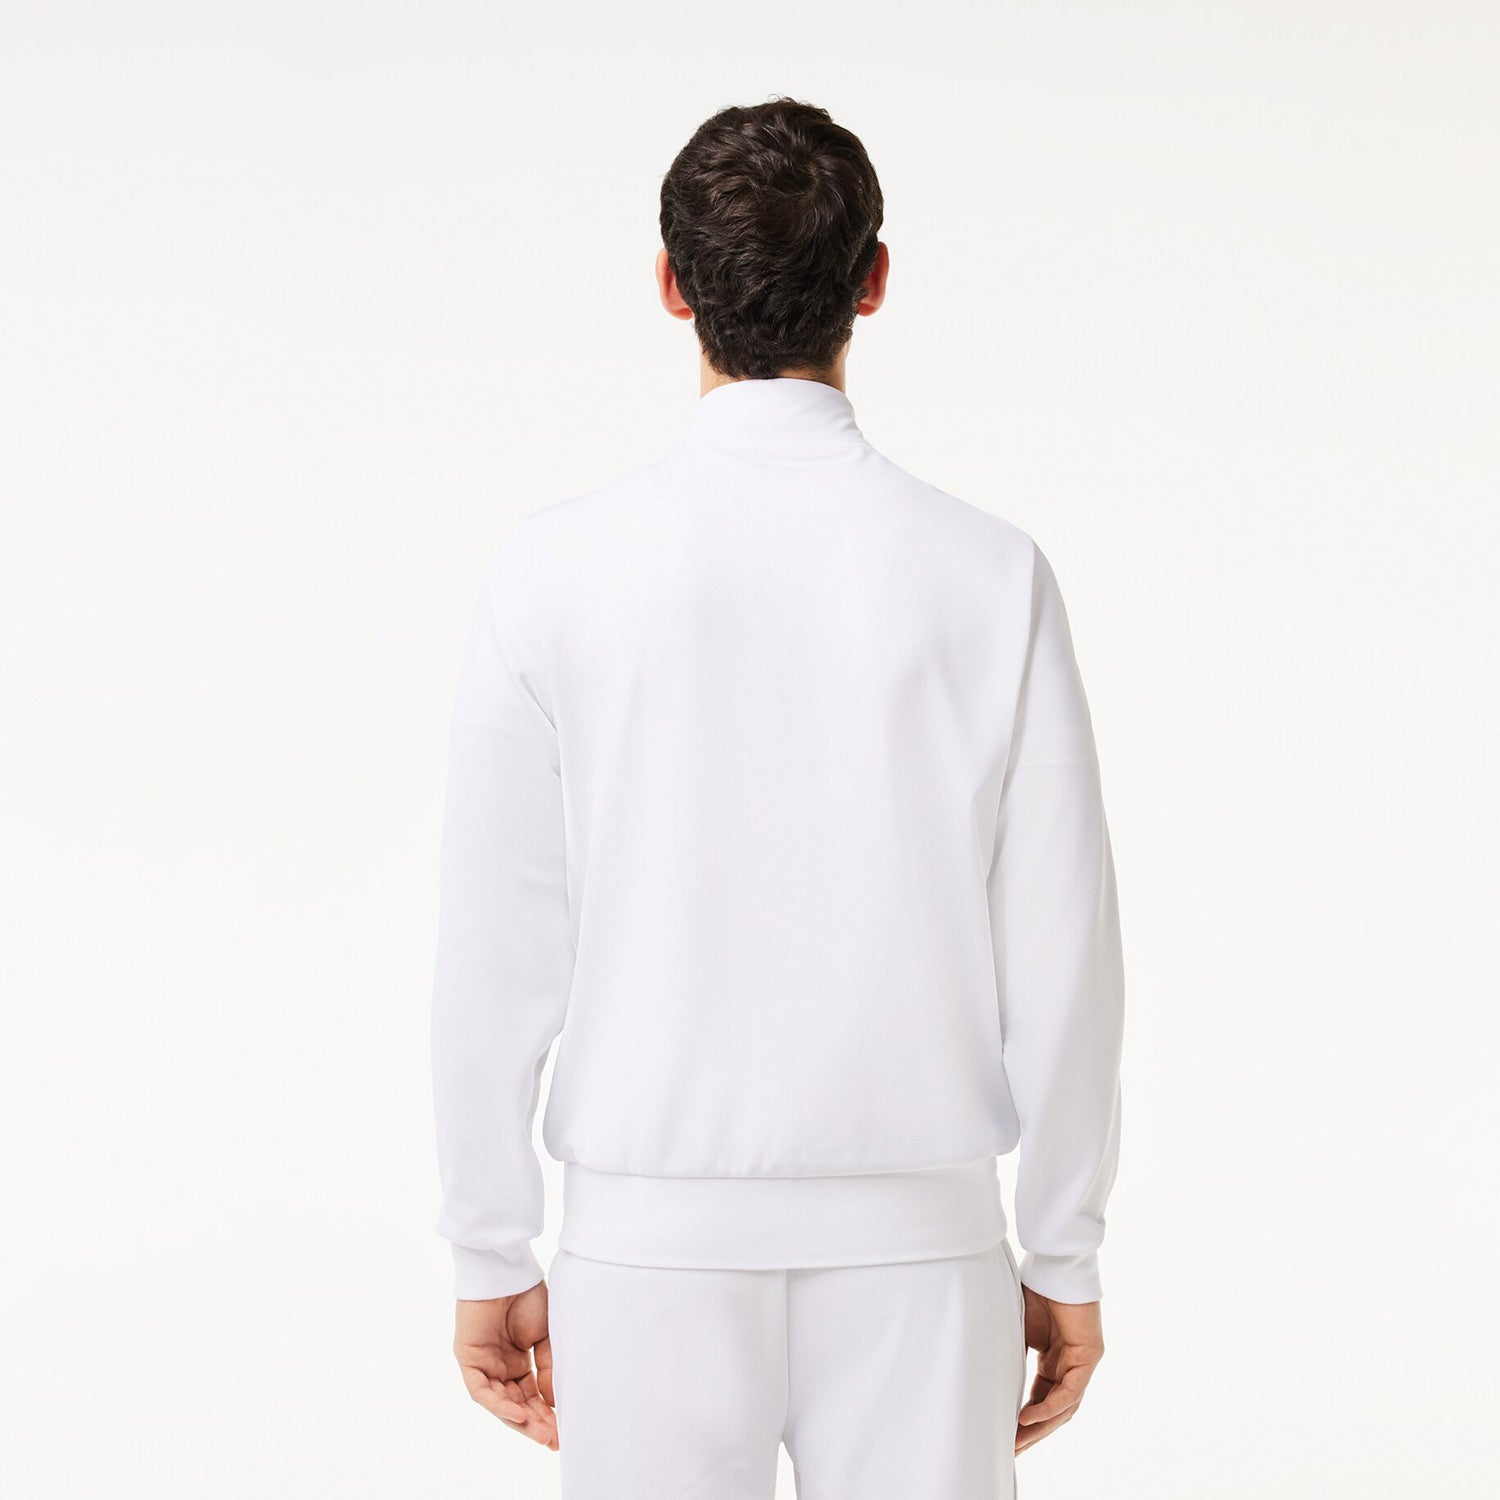 Lacoste Men's Full-Zip Tennis Jacket - White (2)